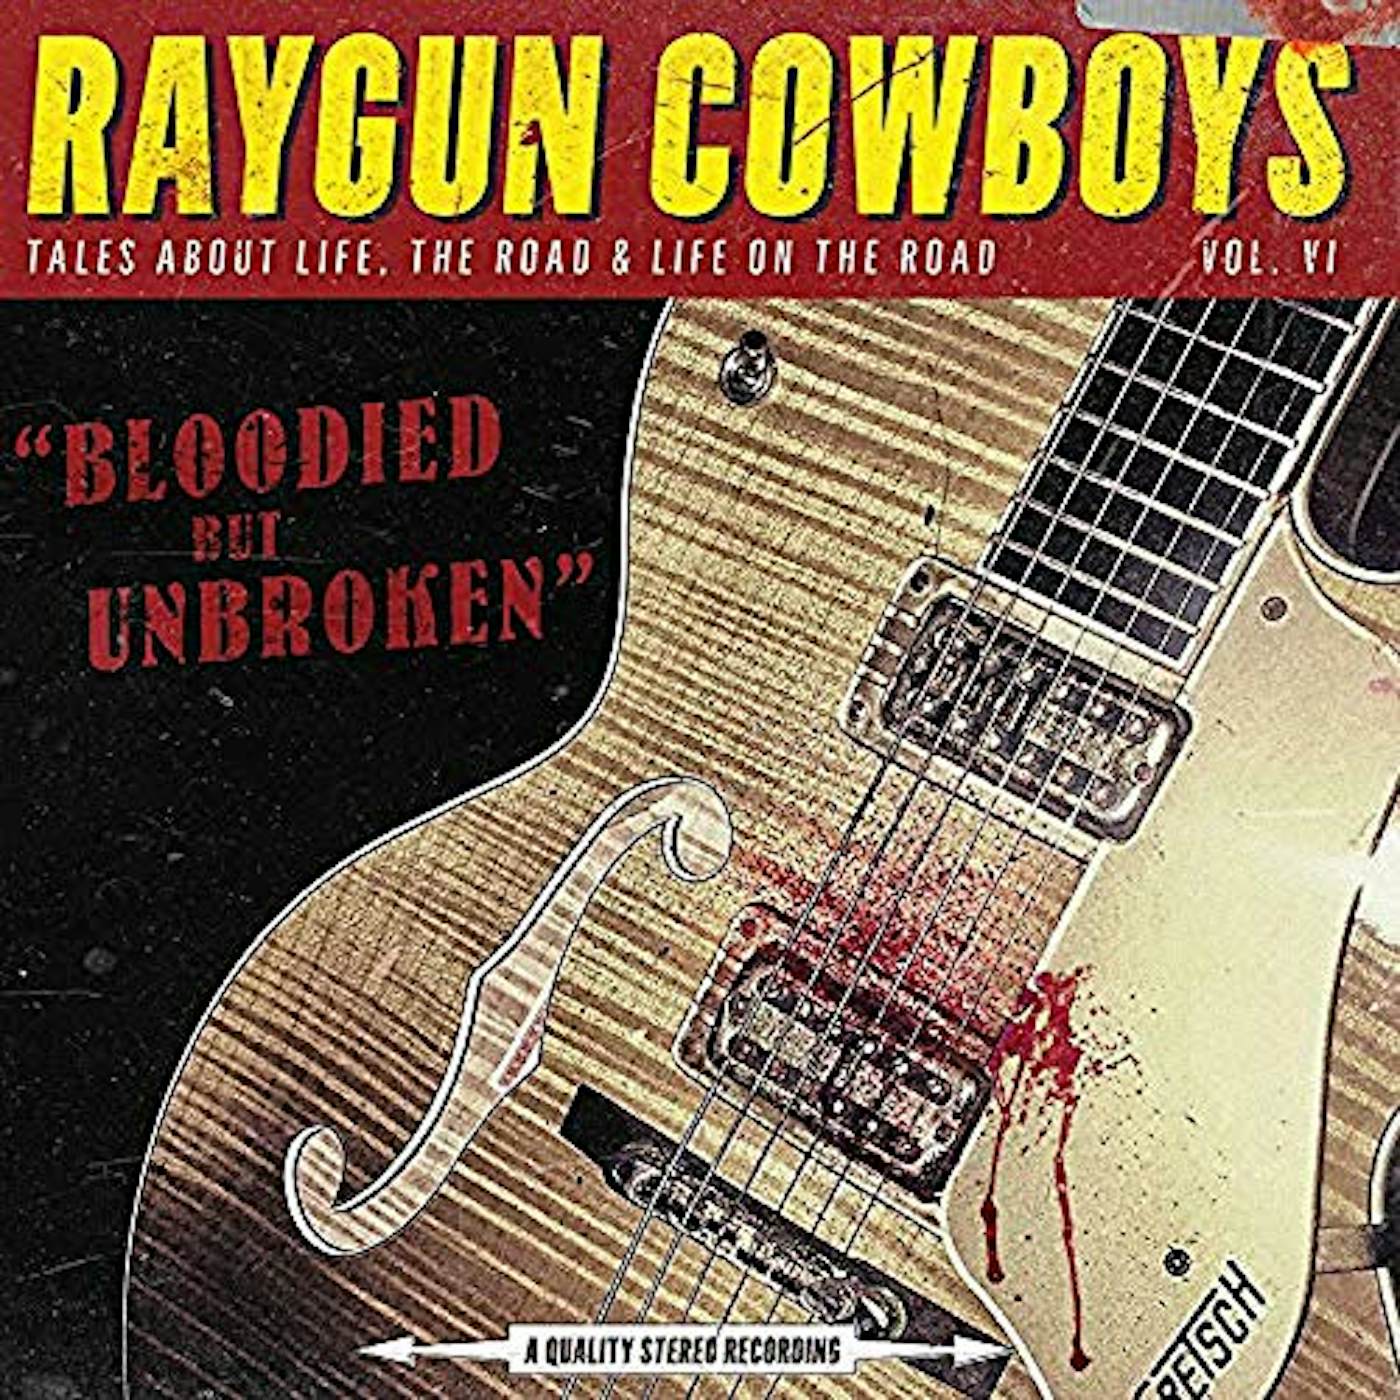 Raygun Cowboys Bloodied But Unbroken Vinyl Record